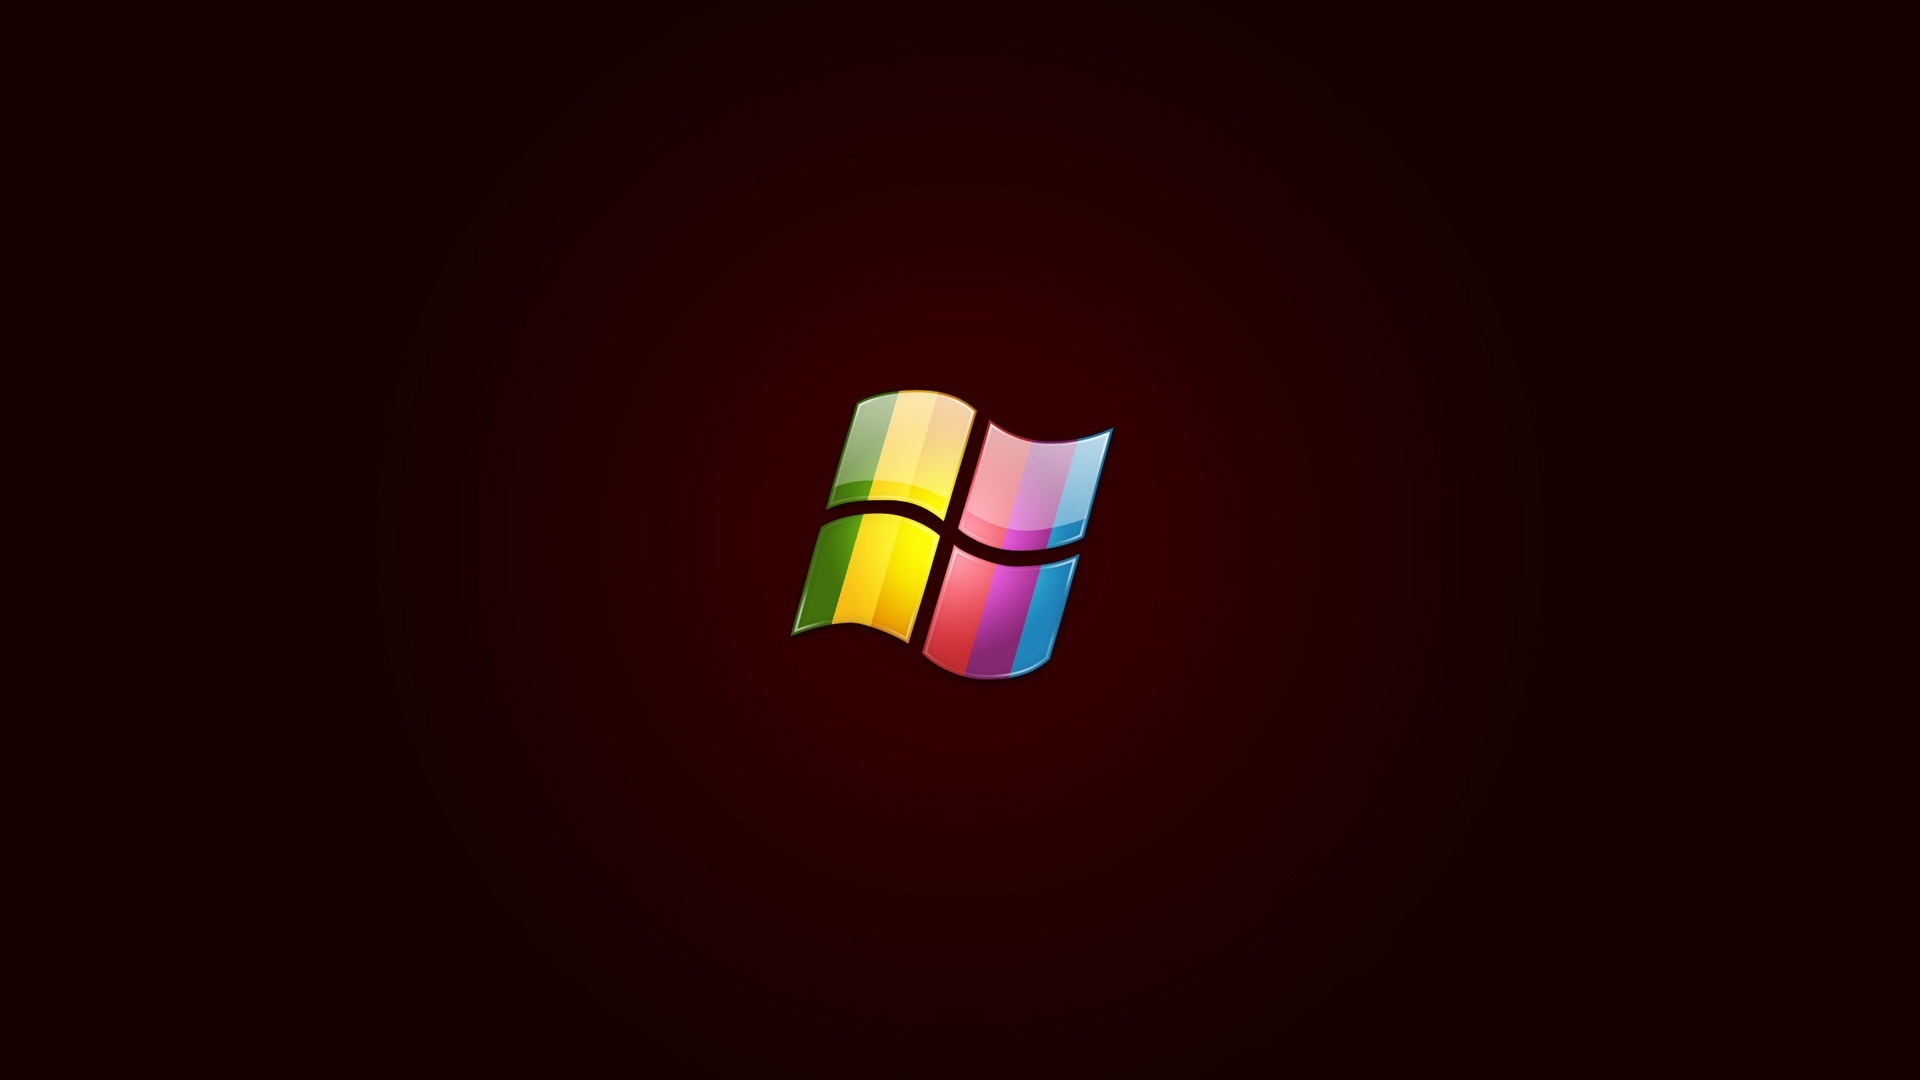 Window Logo Apple Style 1920x1080 HD Image Computers